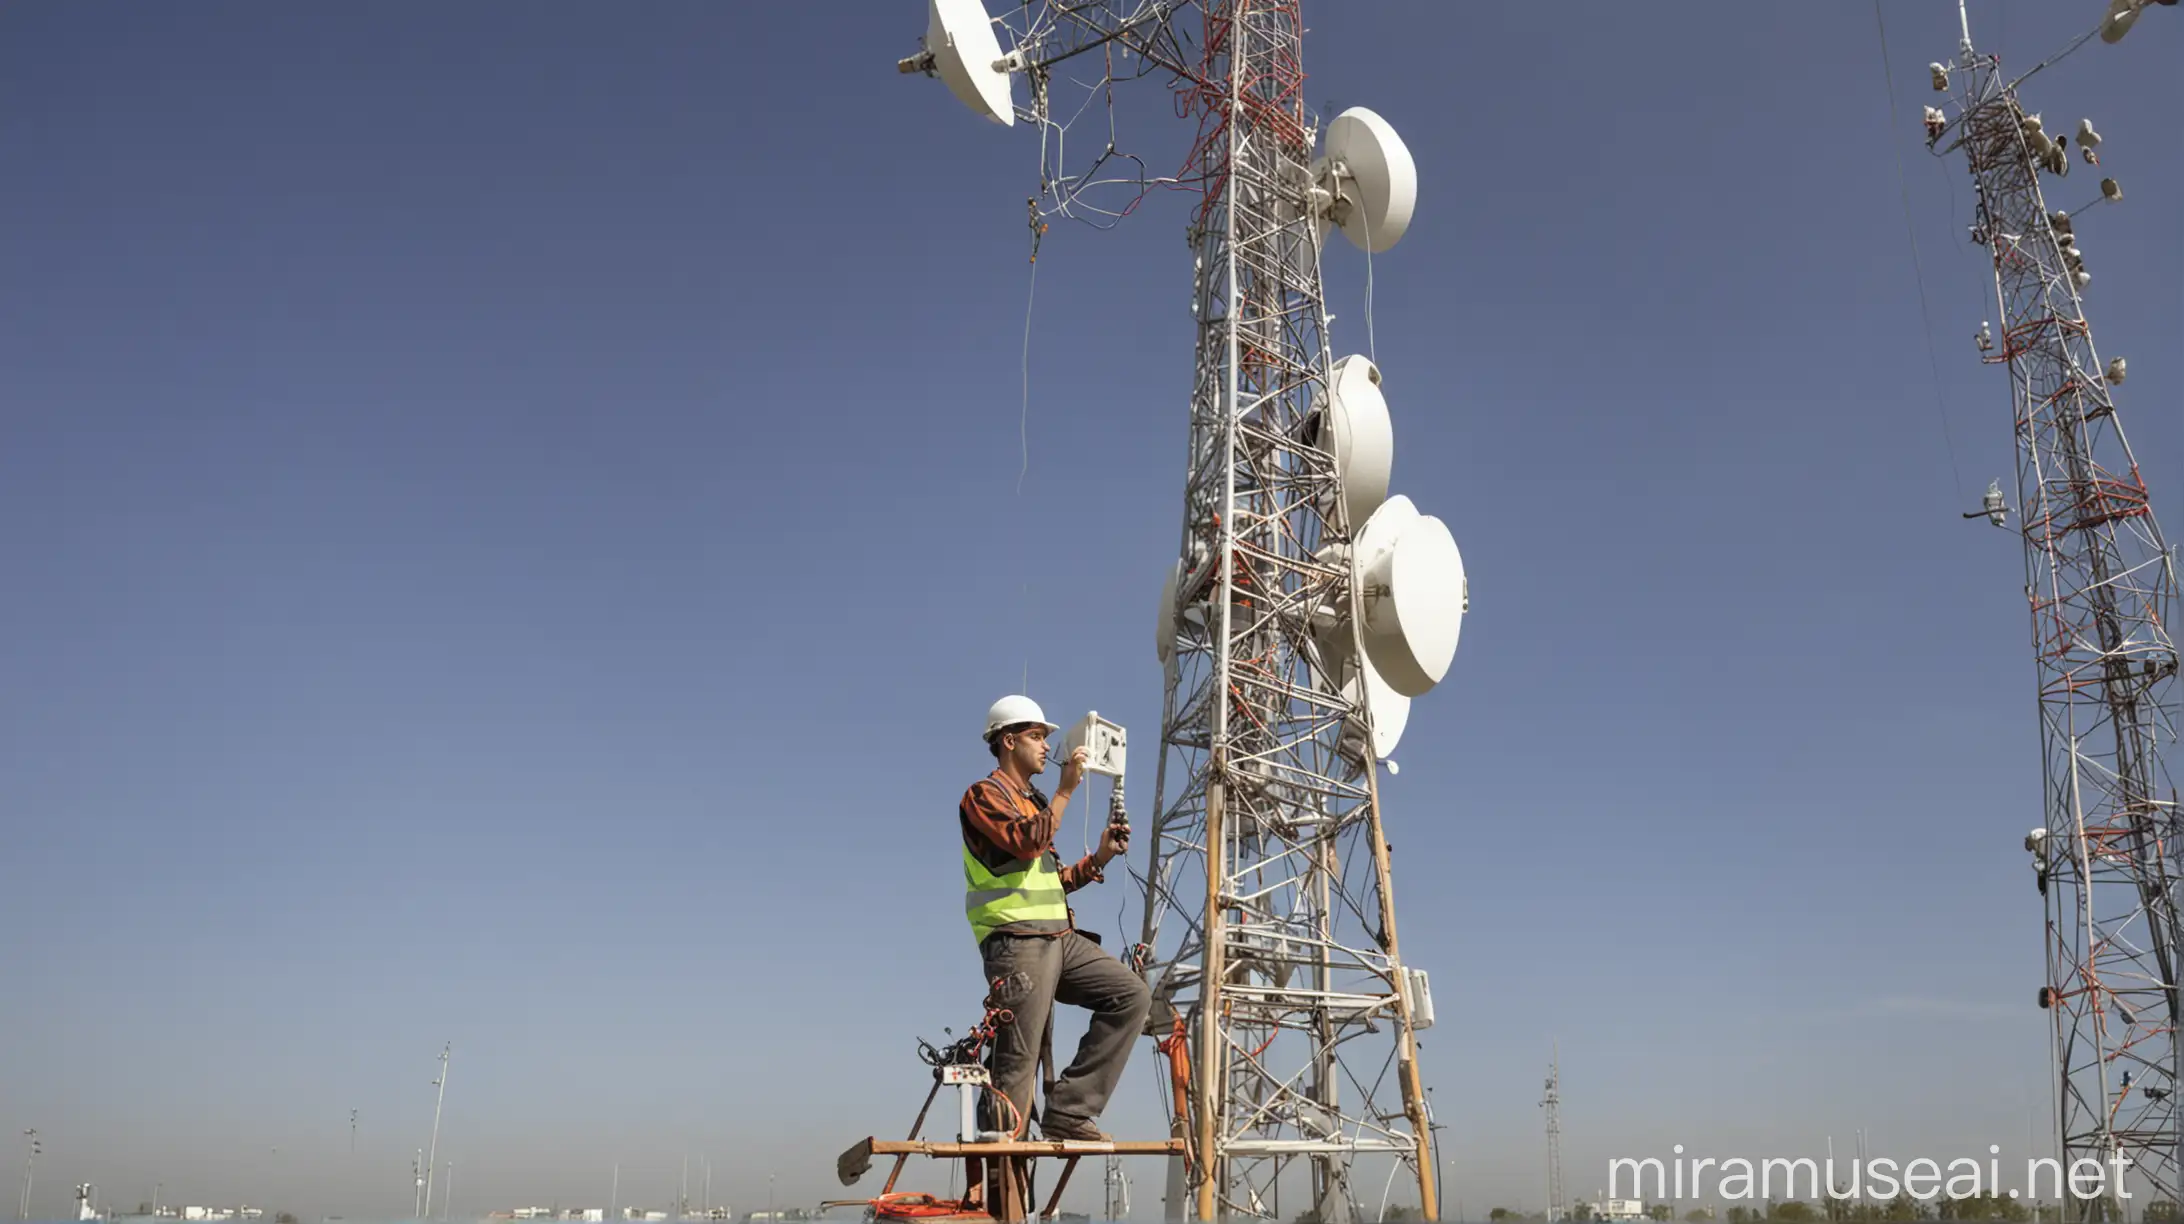 Telecom Field Engineer Installing Antenna Equipment Outdoors